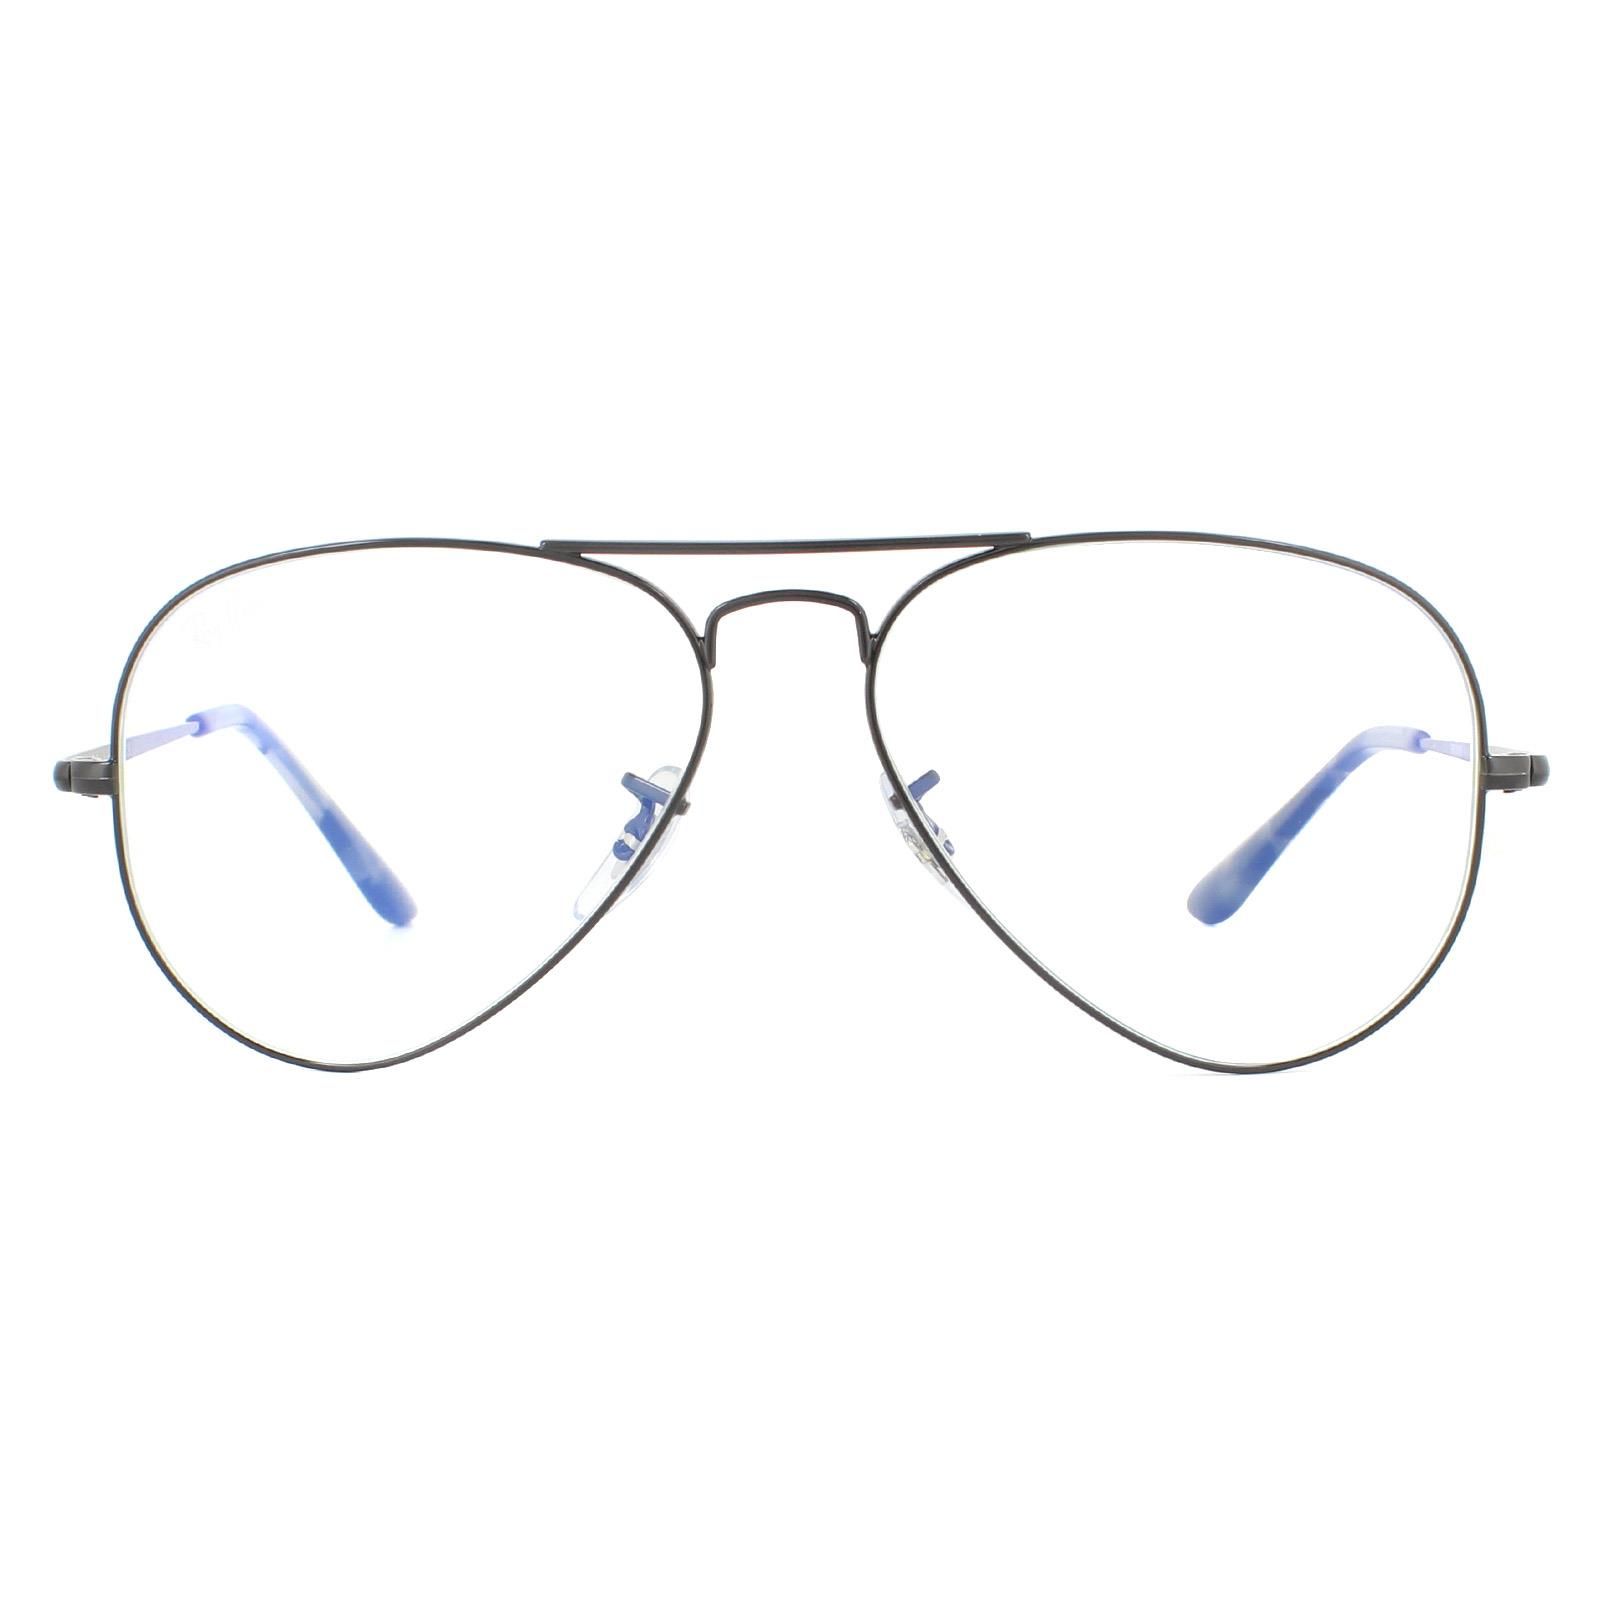 Ray-Ban Aviator Unisex Black Clear Blue Light Filter Sunglasses